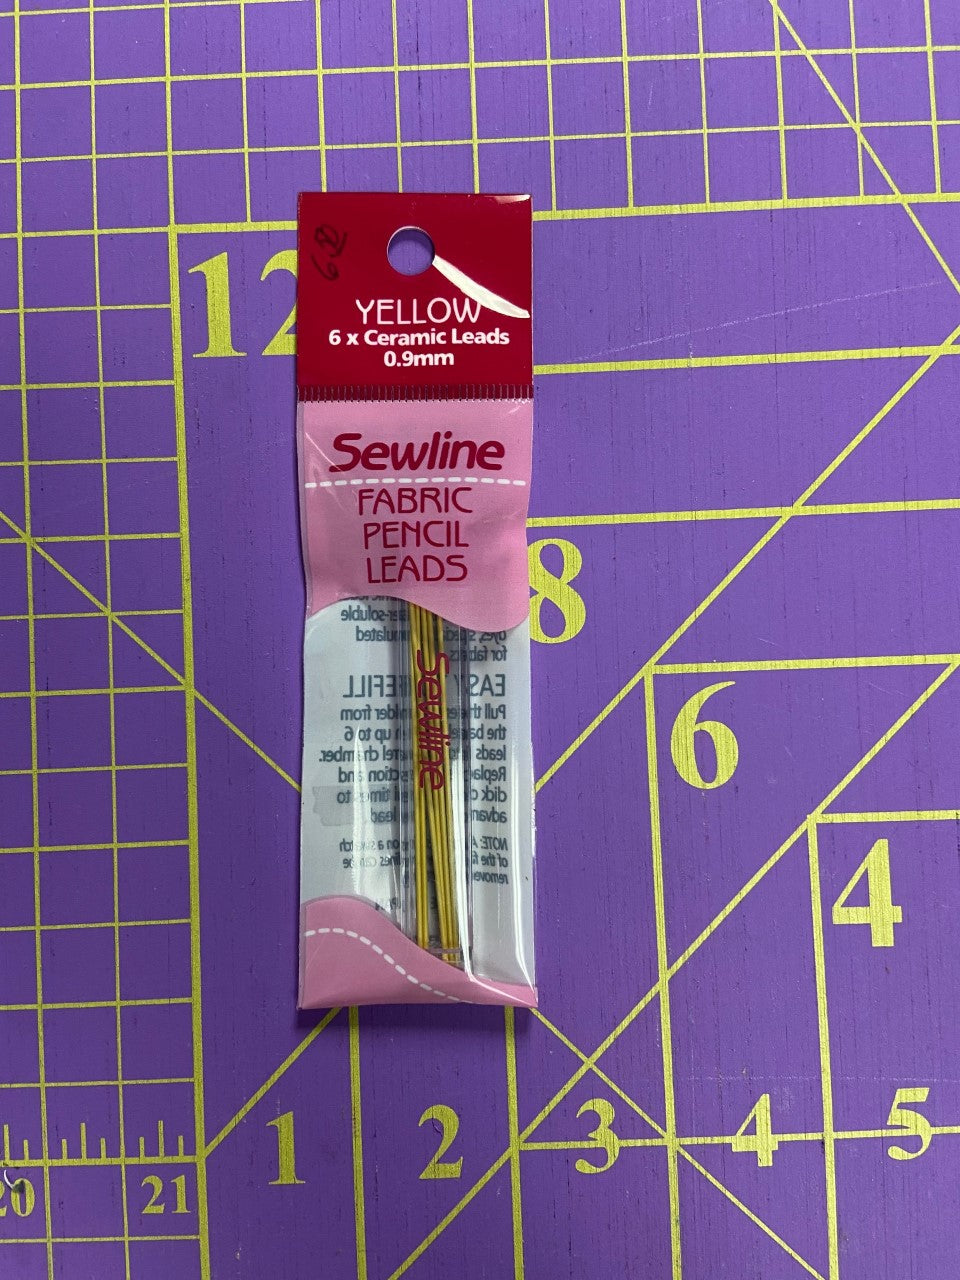 Sewline Fabric Pencil Leads